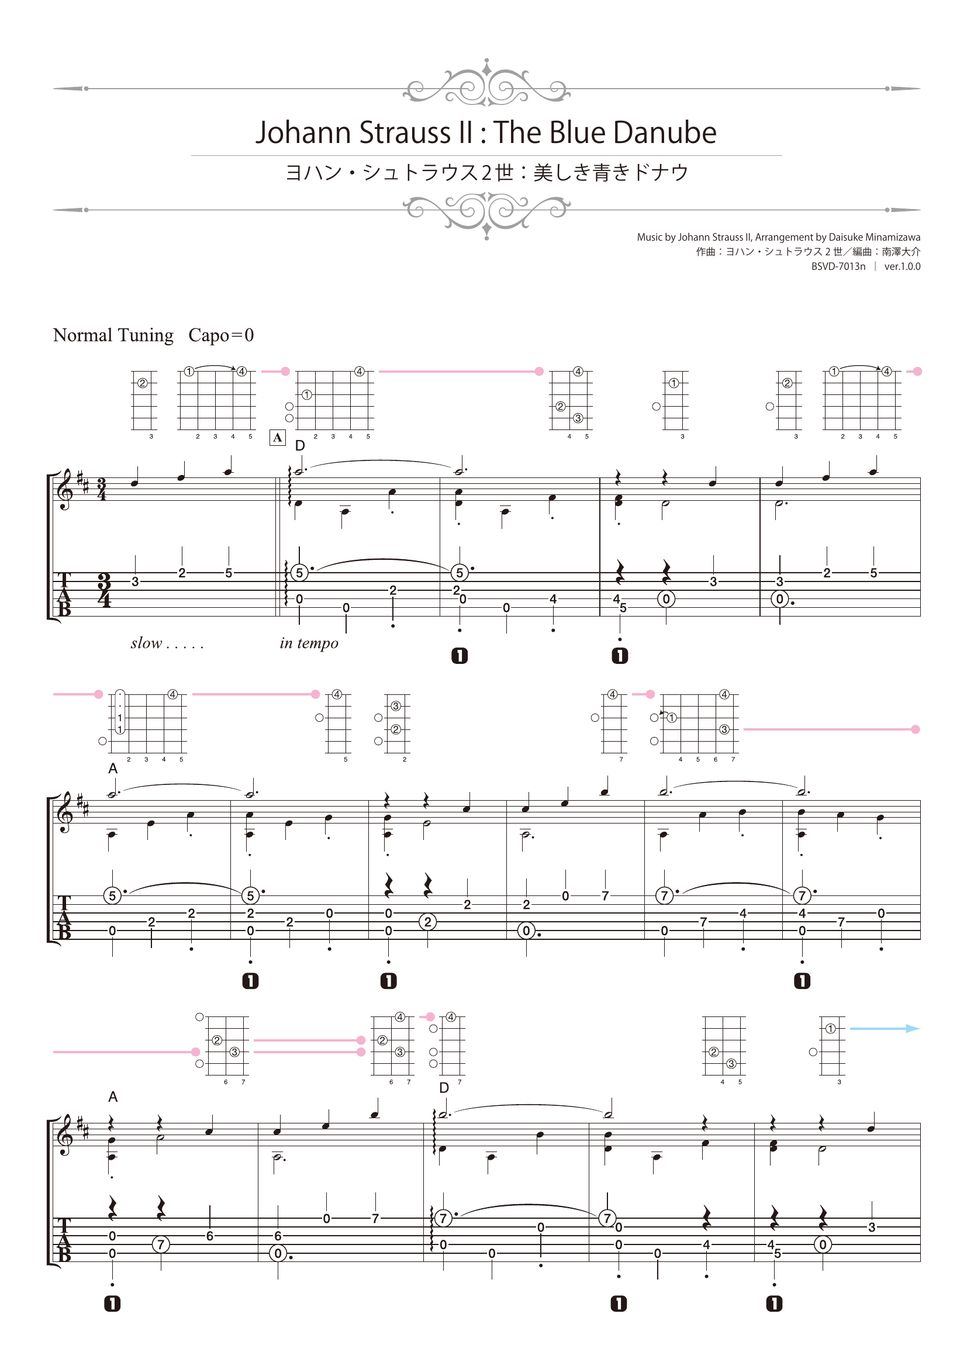 Johann Strauss II - The Blue Danube (Solo Guitar) by Daisuke Minamizawa